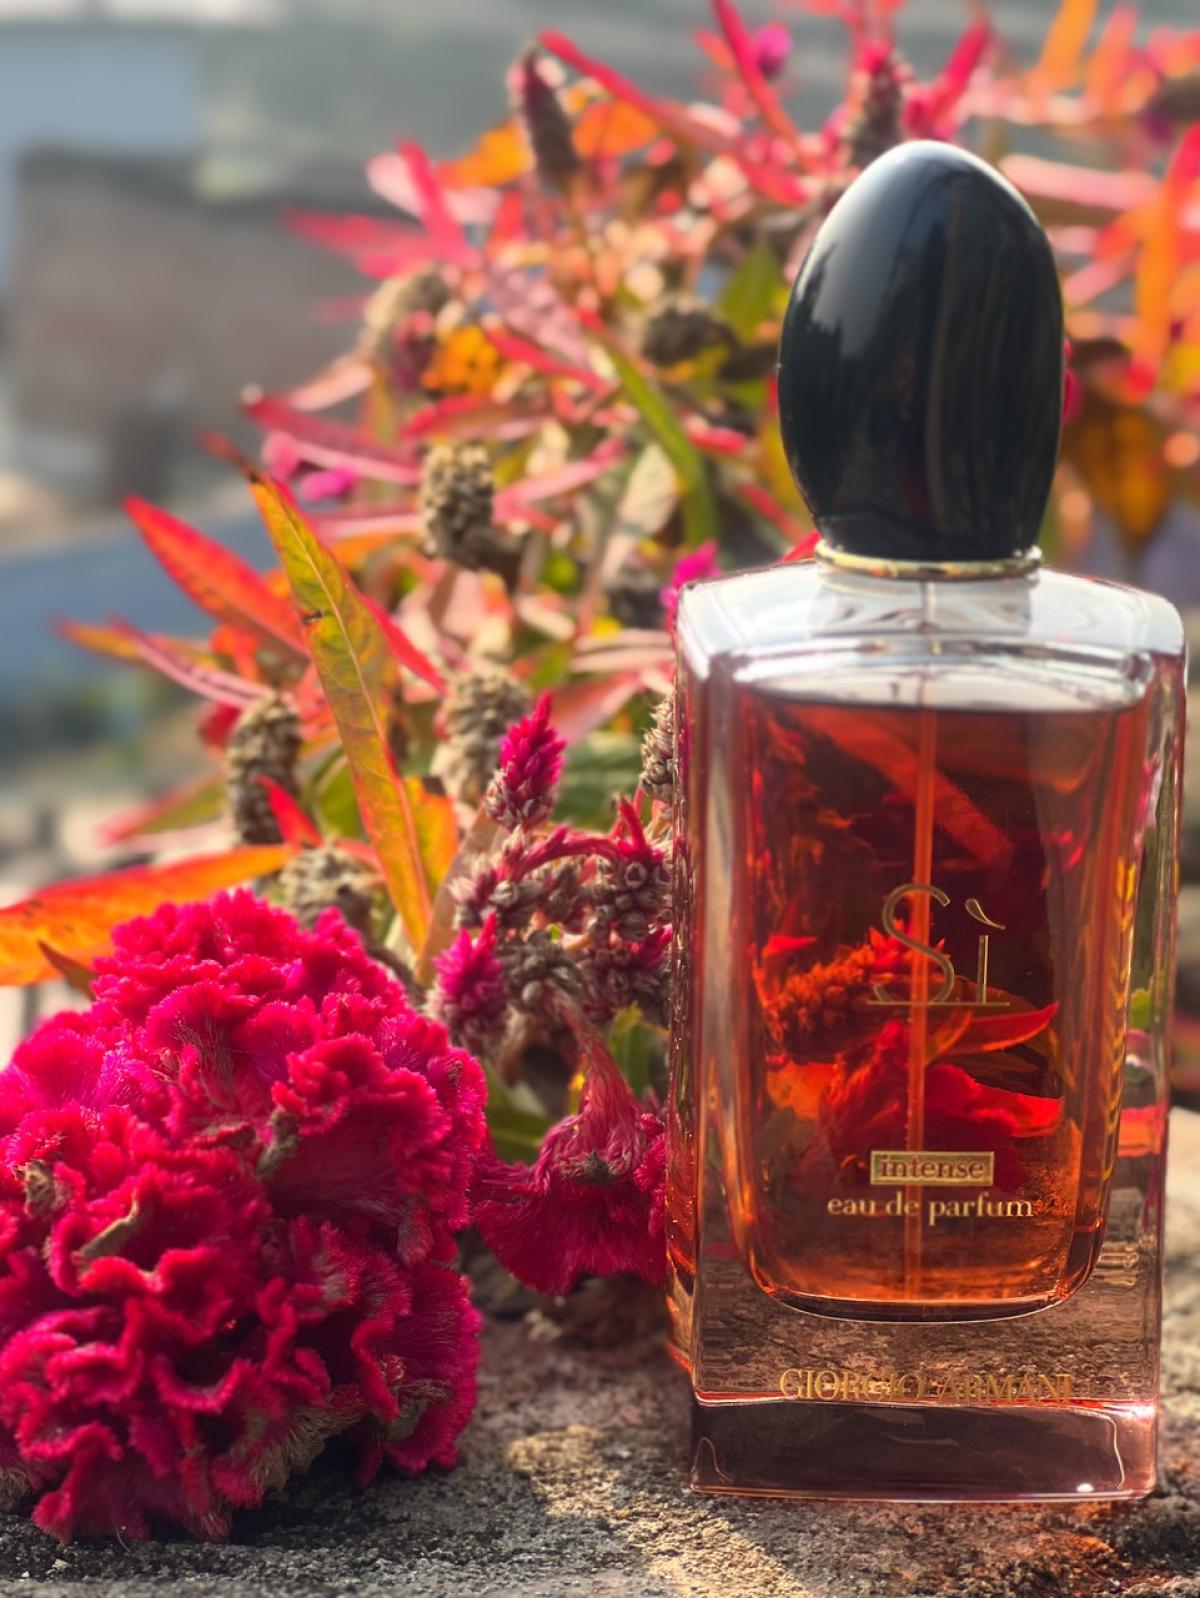 Sì Intense 2021 Giorgio Armani perfume - a fragrance for women 2021